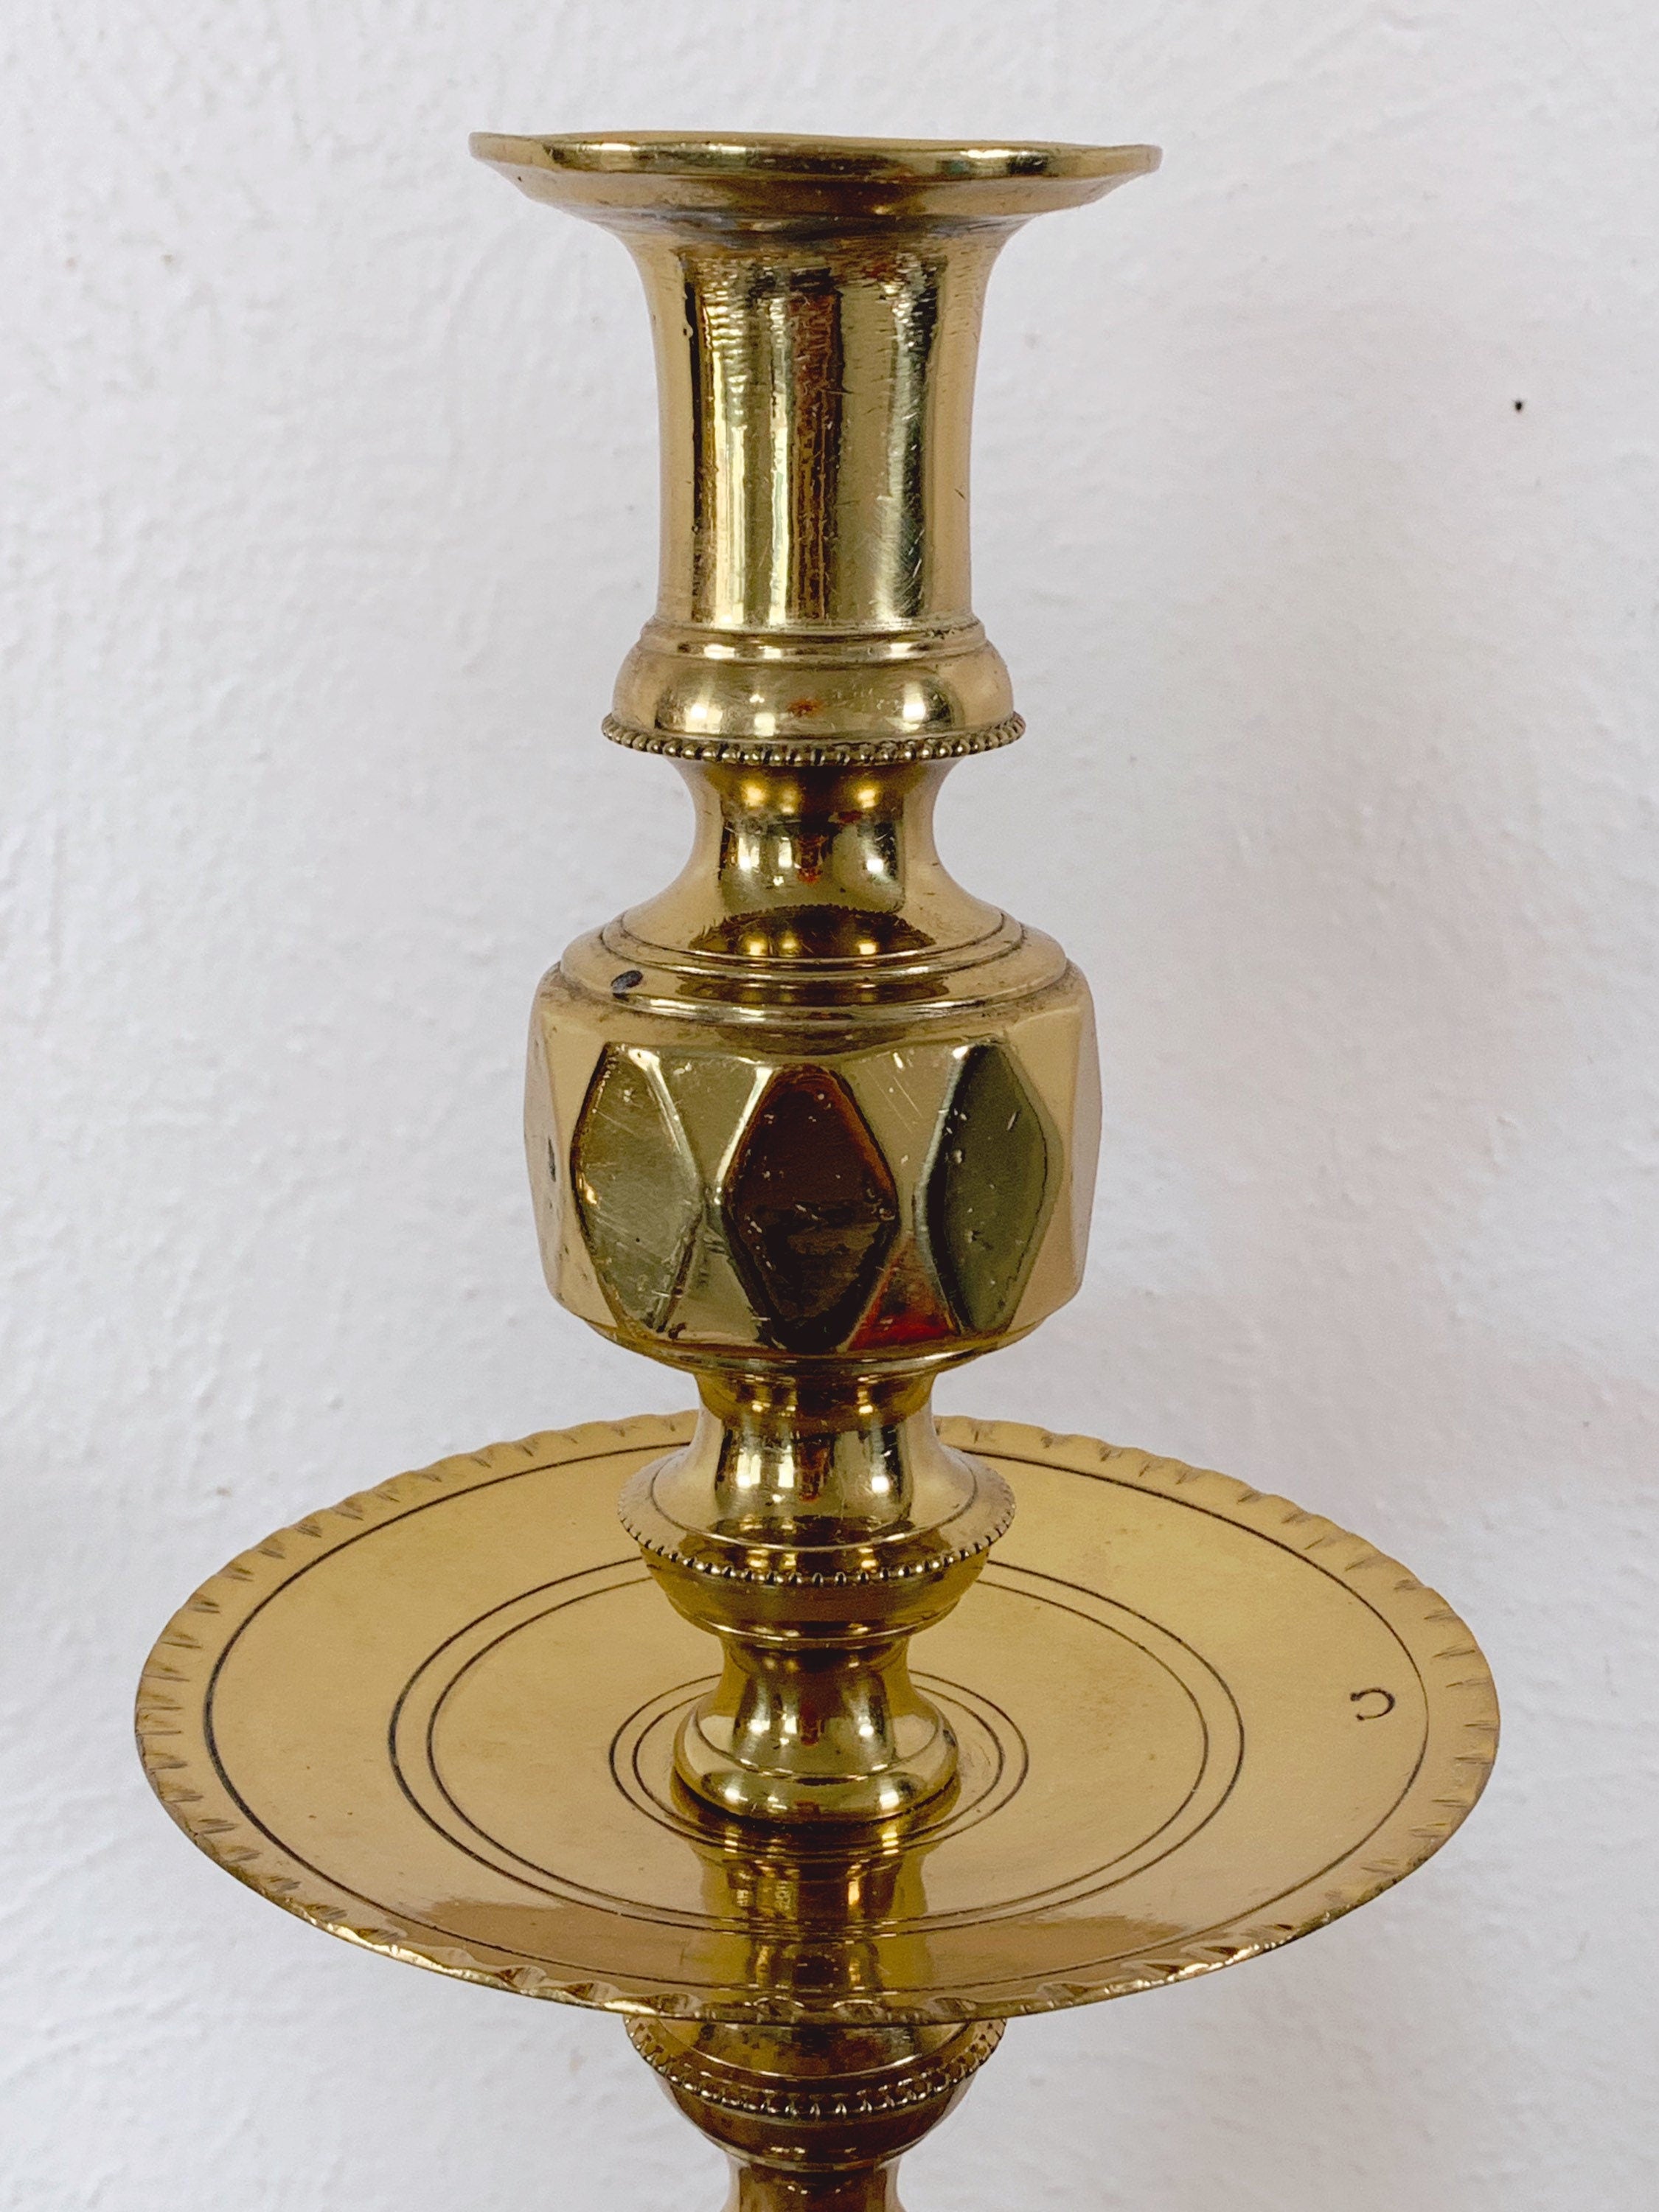 Pair of Tall Schatz & Bolander Birmingham England Antique Brass Candlesticks | 19th Century Beehive Victorian English Candle Holders